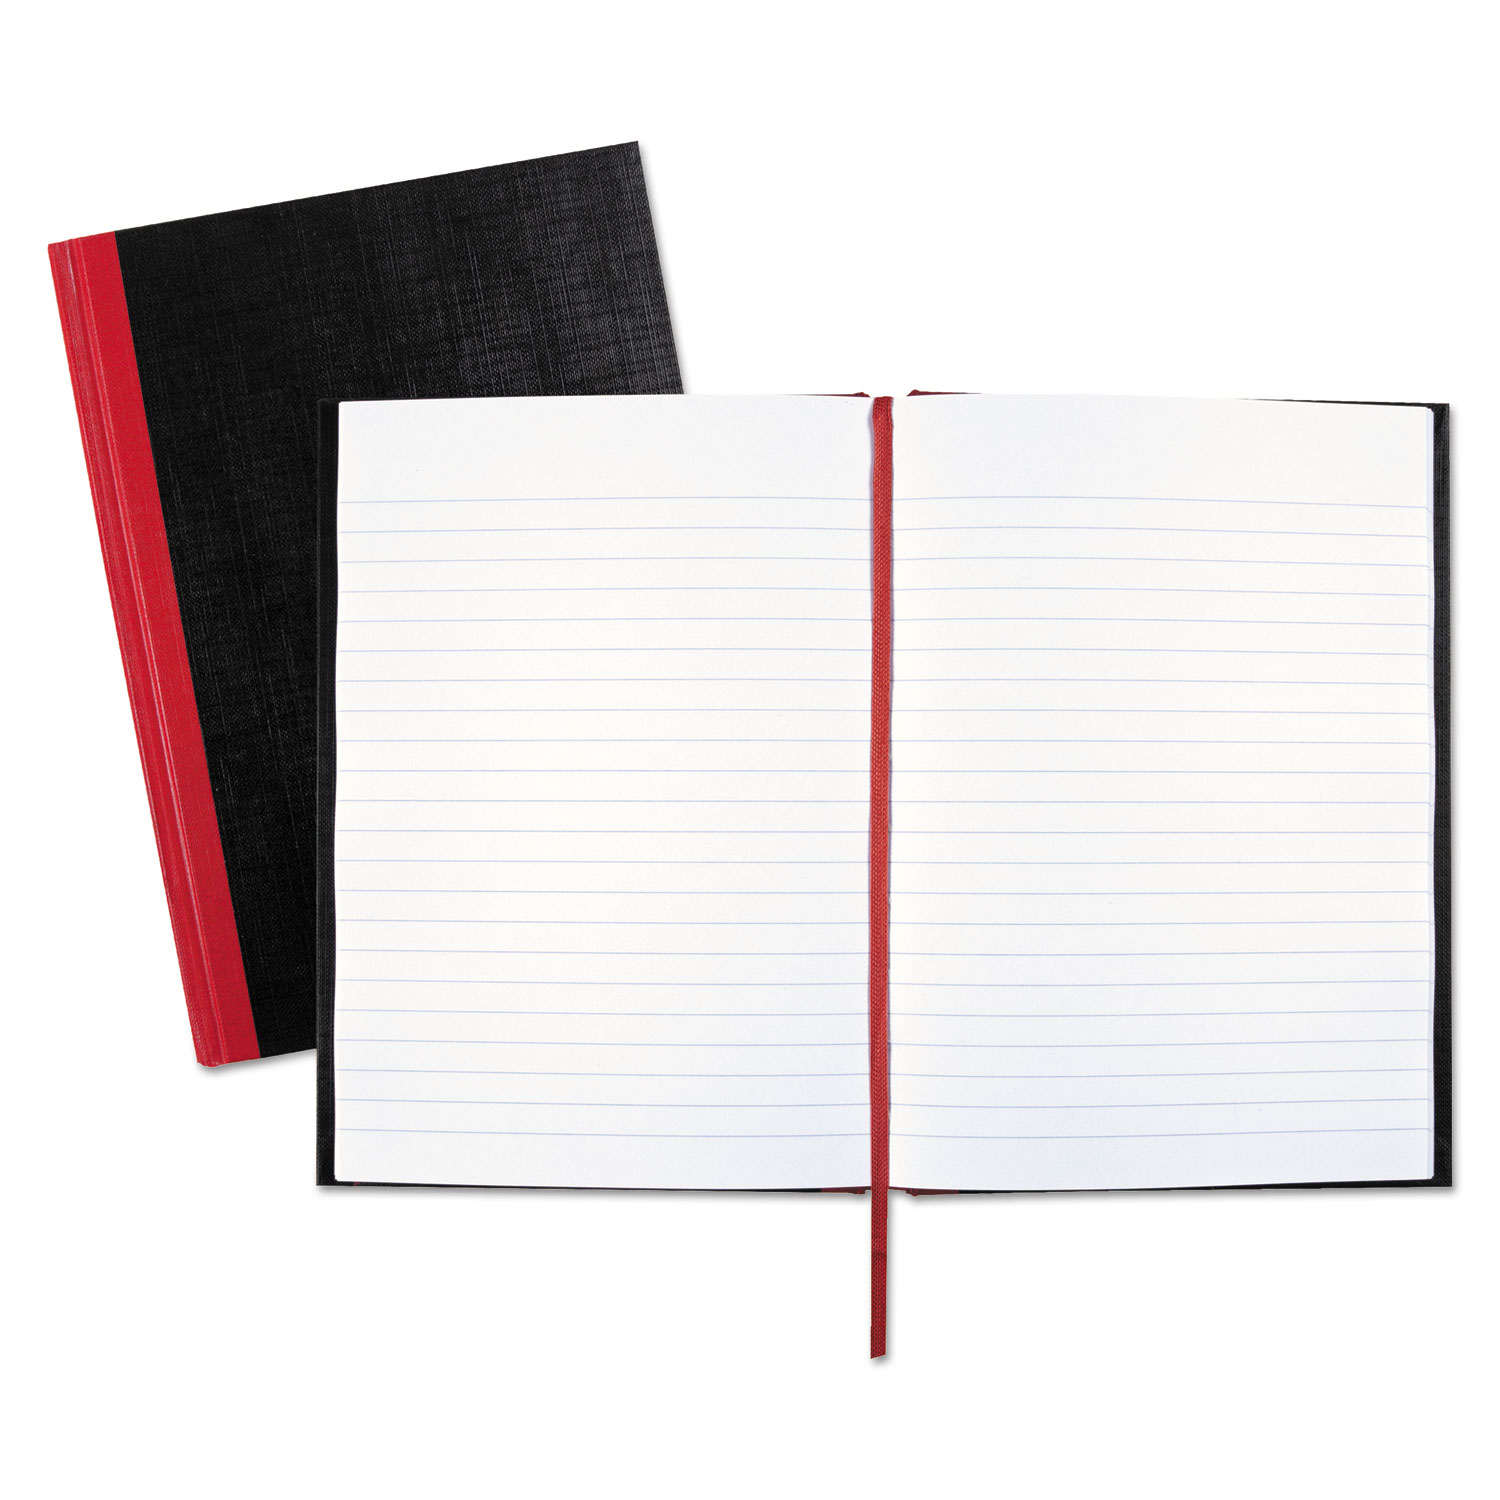  Black n' Red E66857 Casebound Notebooks, Wide/Legal Rule, Black Cover, 8.25 x 5.68, 96 Sheets (JDKE66857) 